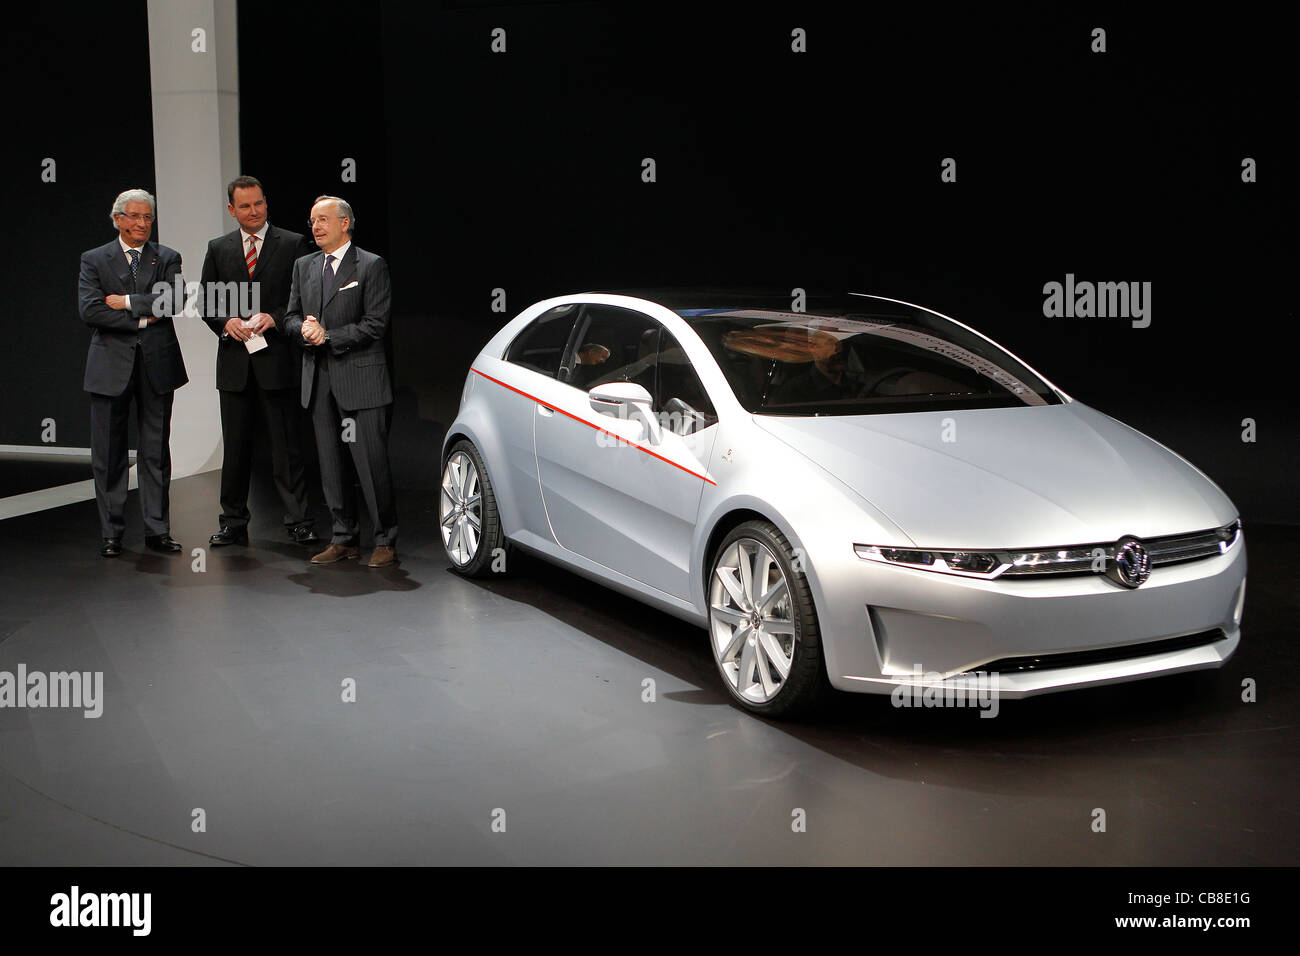 Stunning Volkswagen T6 Tuning Project at Geneva Motor Show